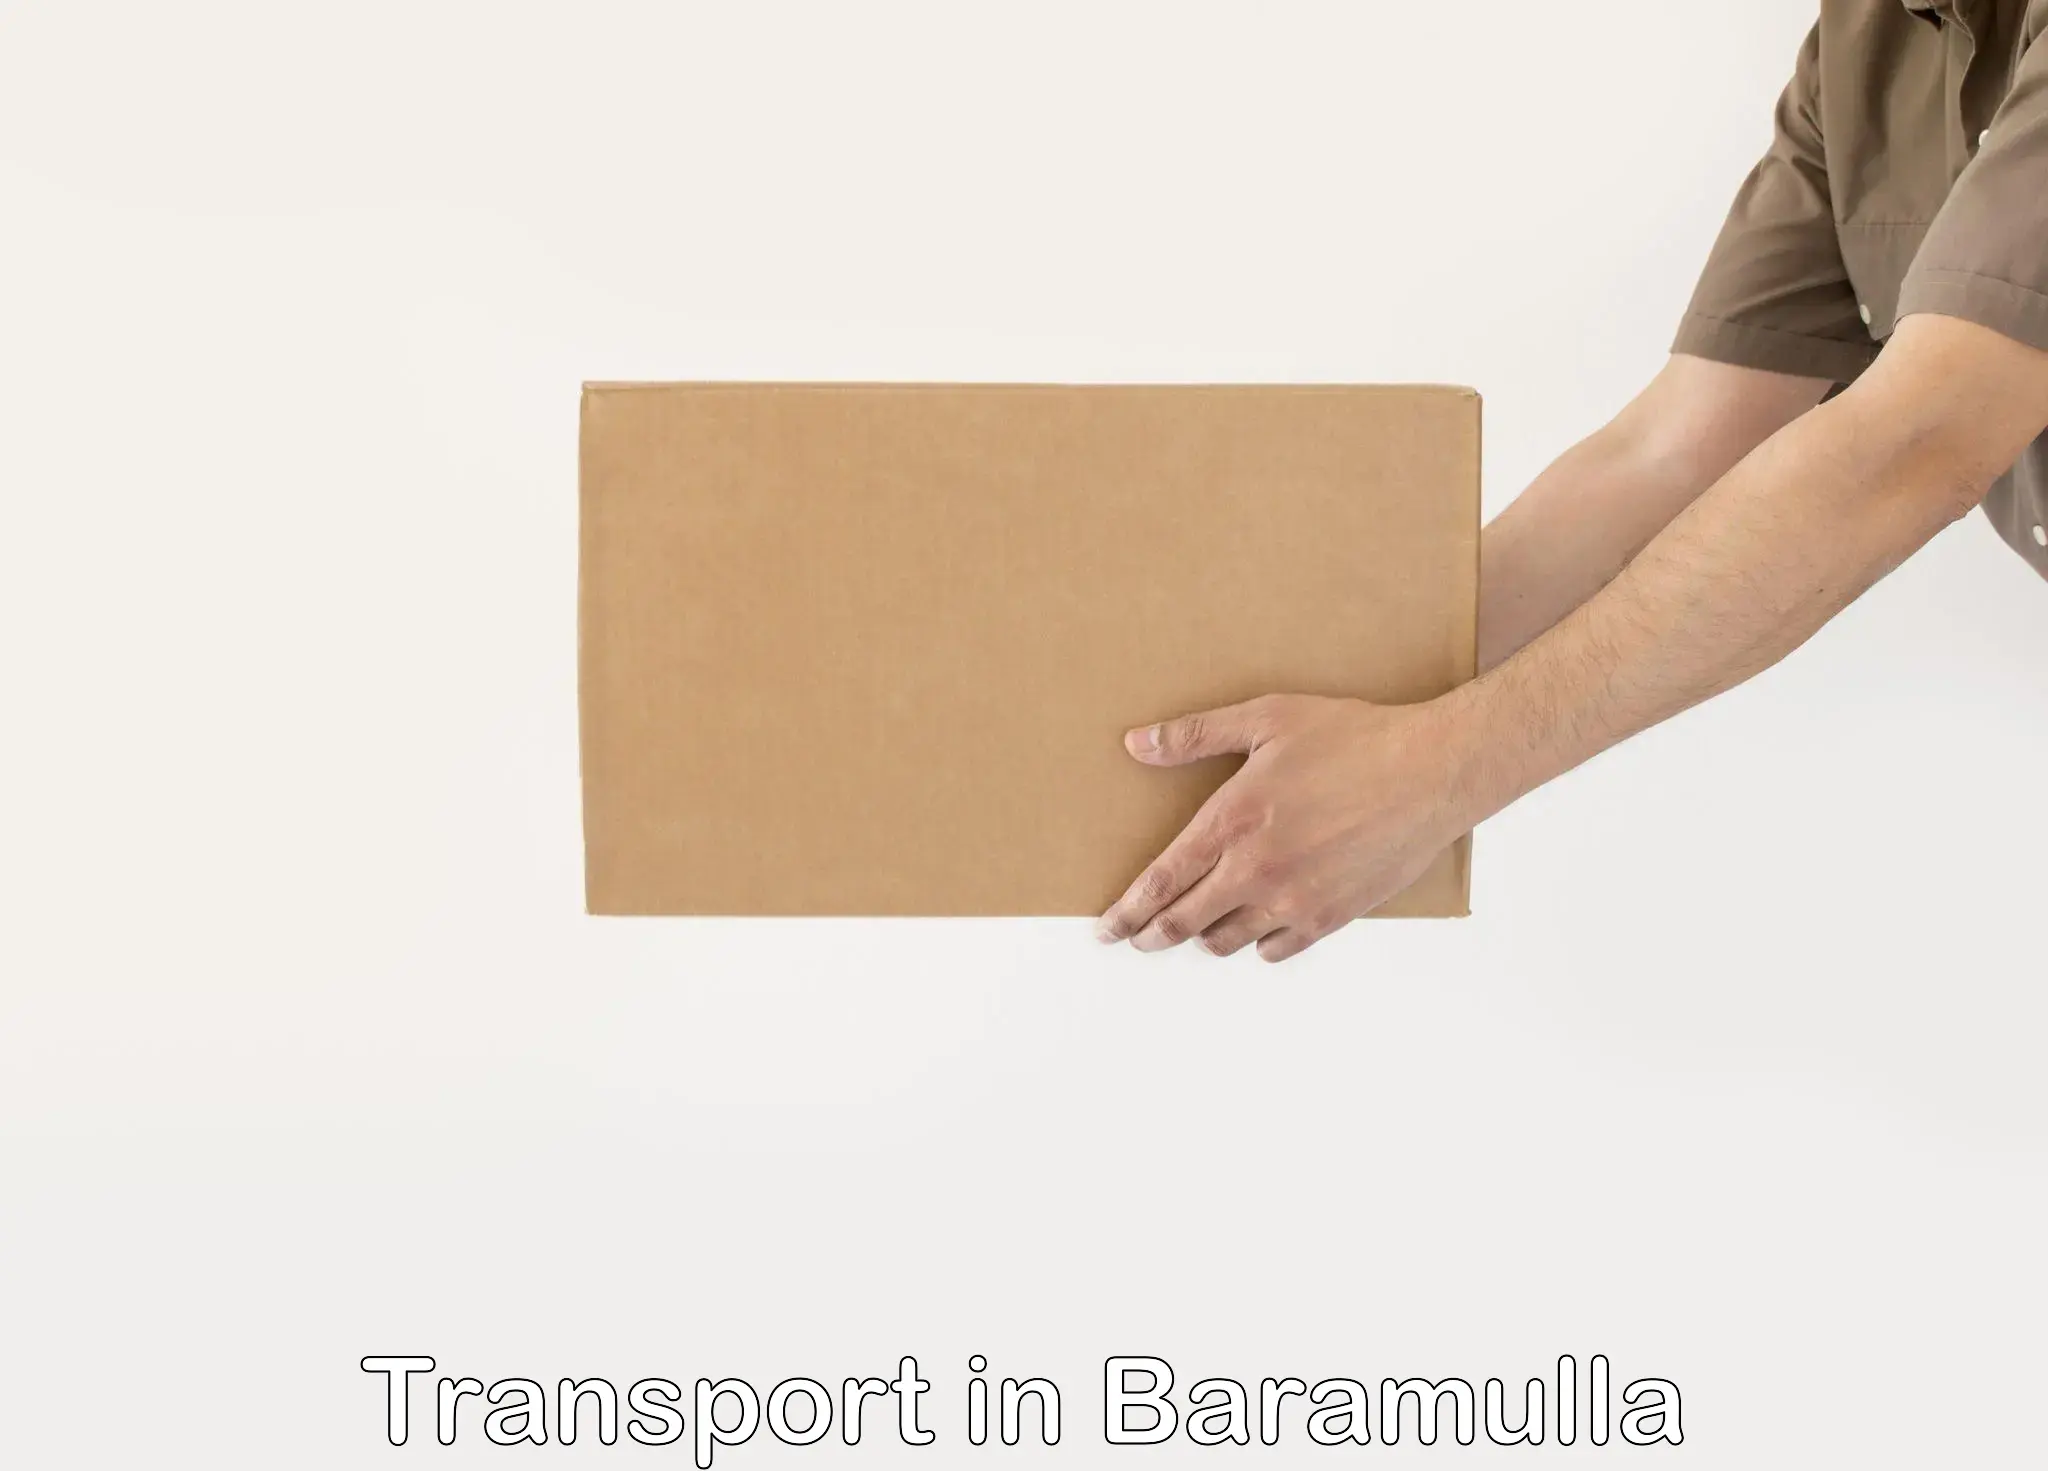 Cargo transportation services in Baramulla